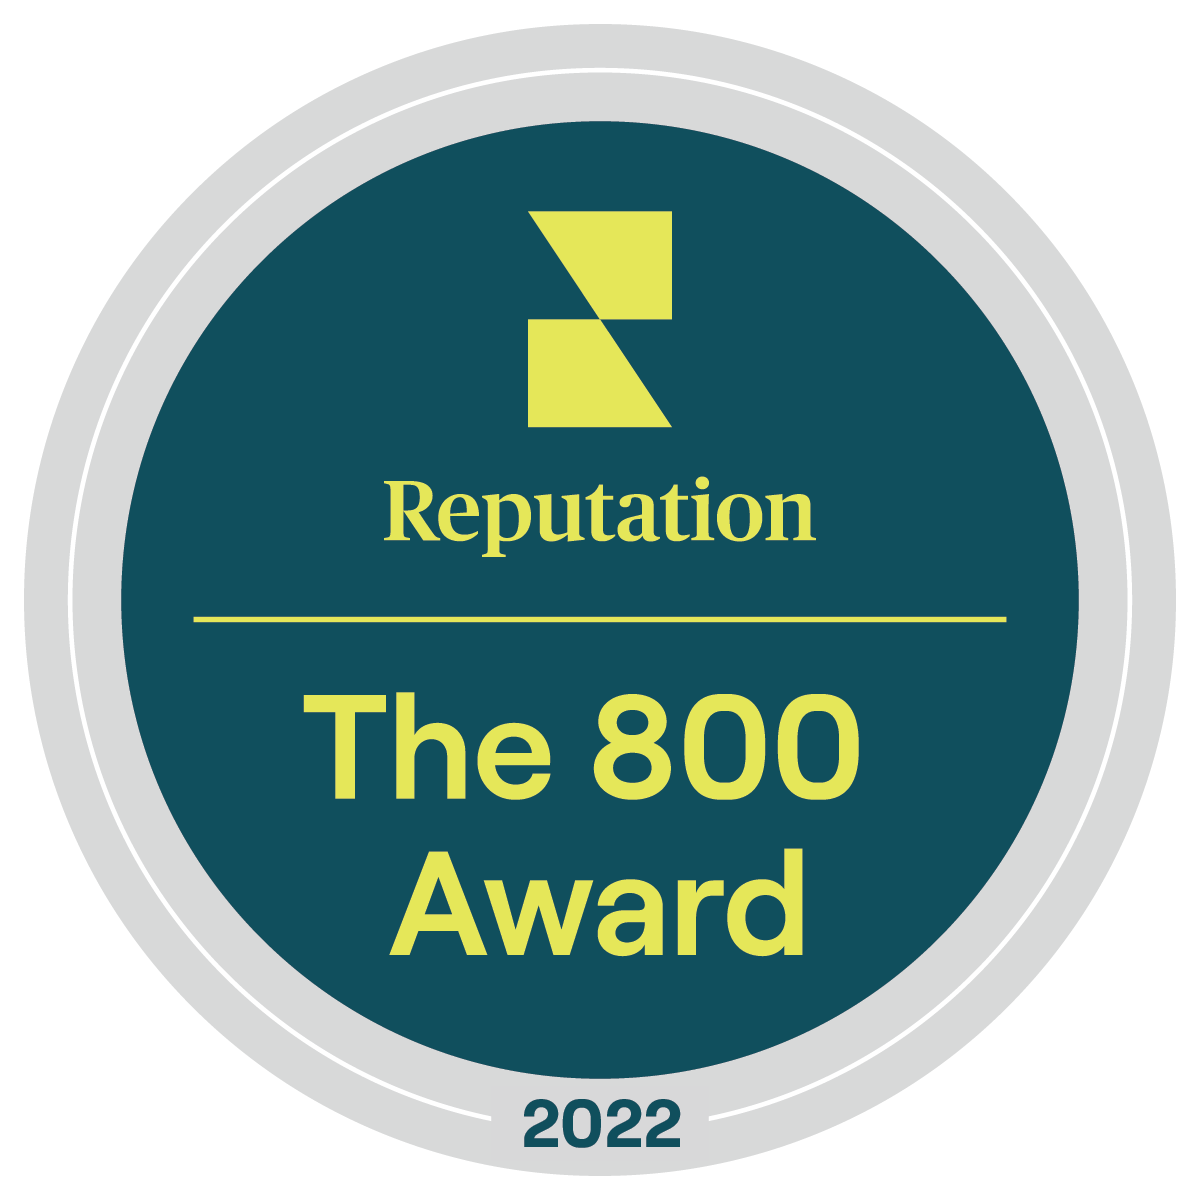 2022 Reputation The 800 Award logo